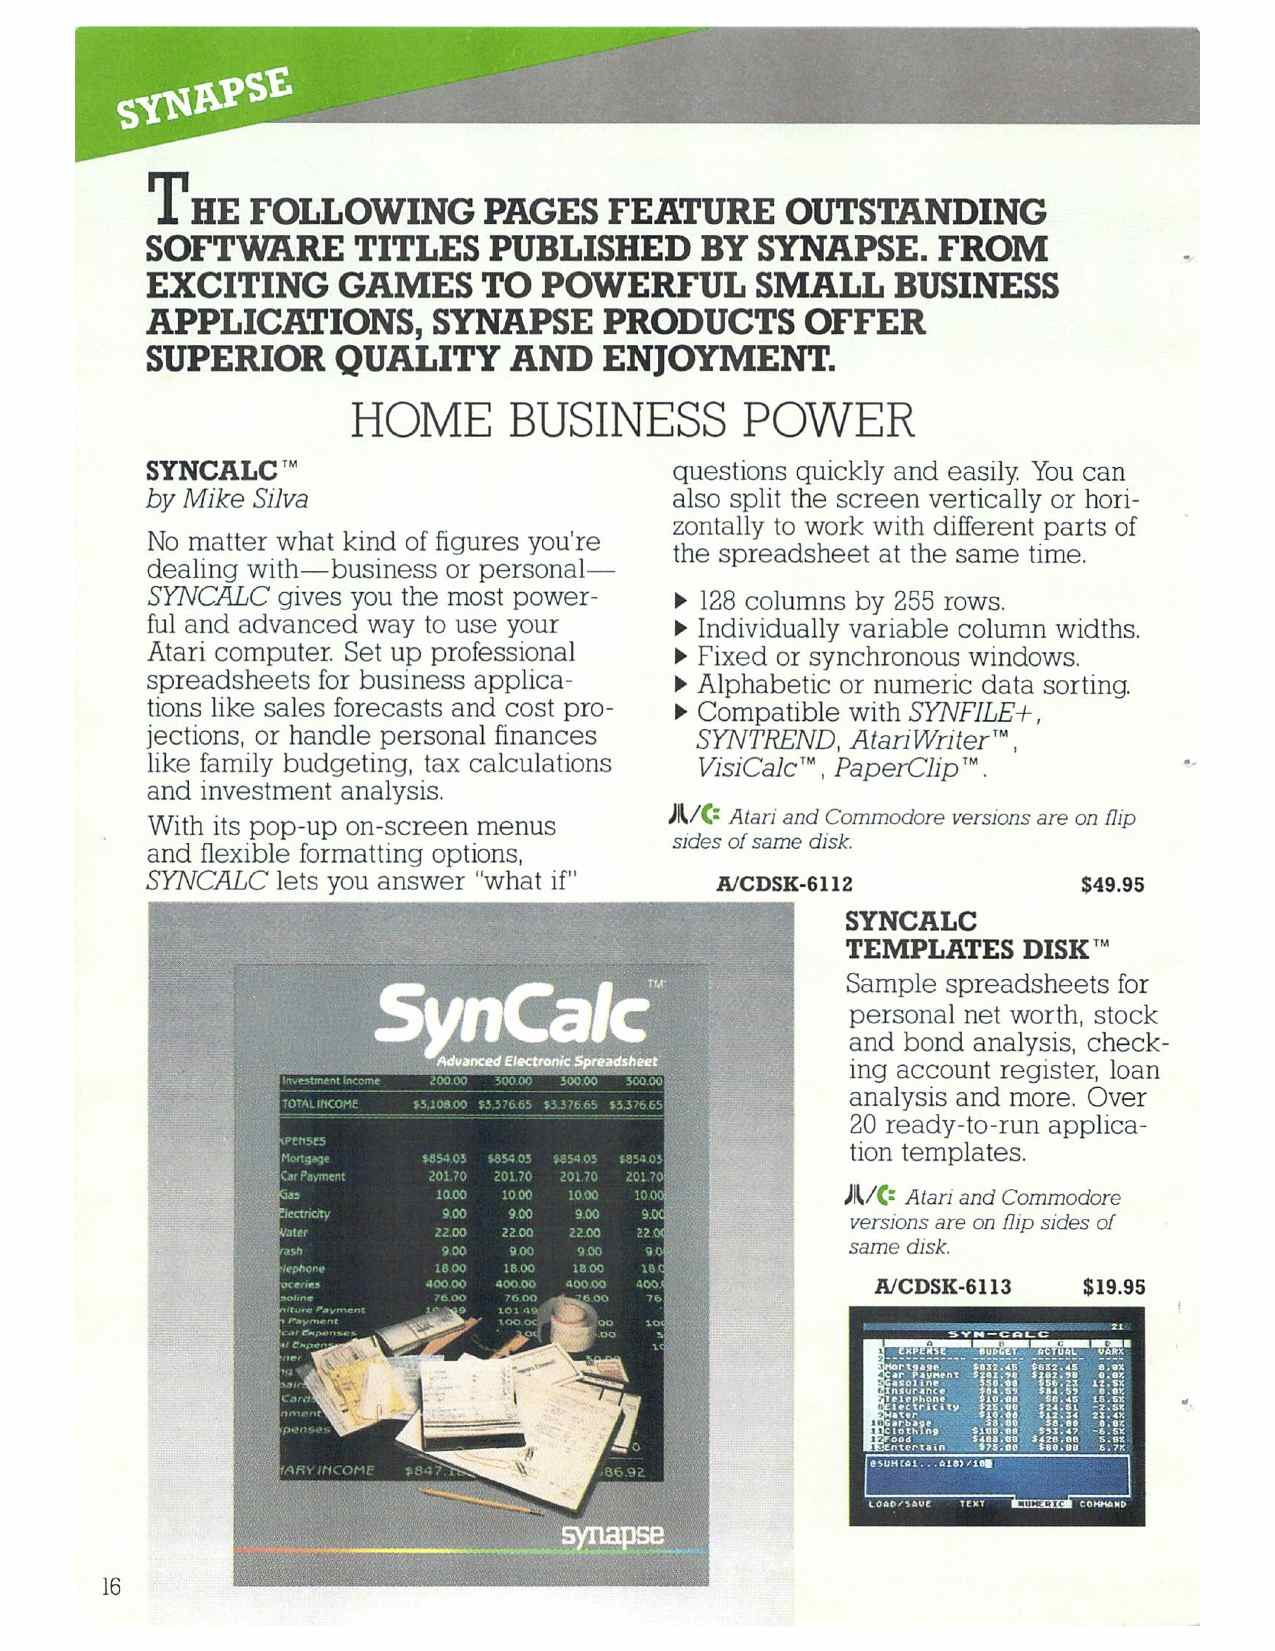 SynCalc/syncalc_1985_ad.jpg